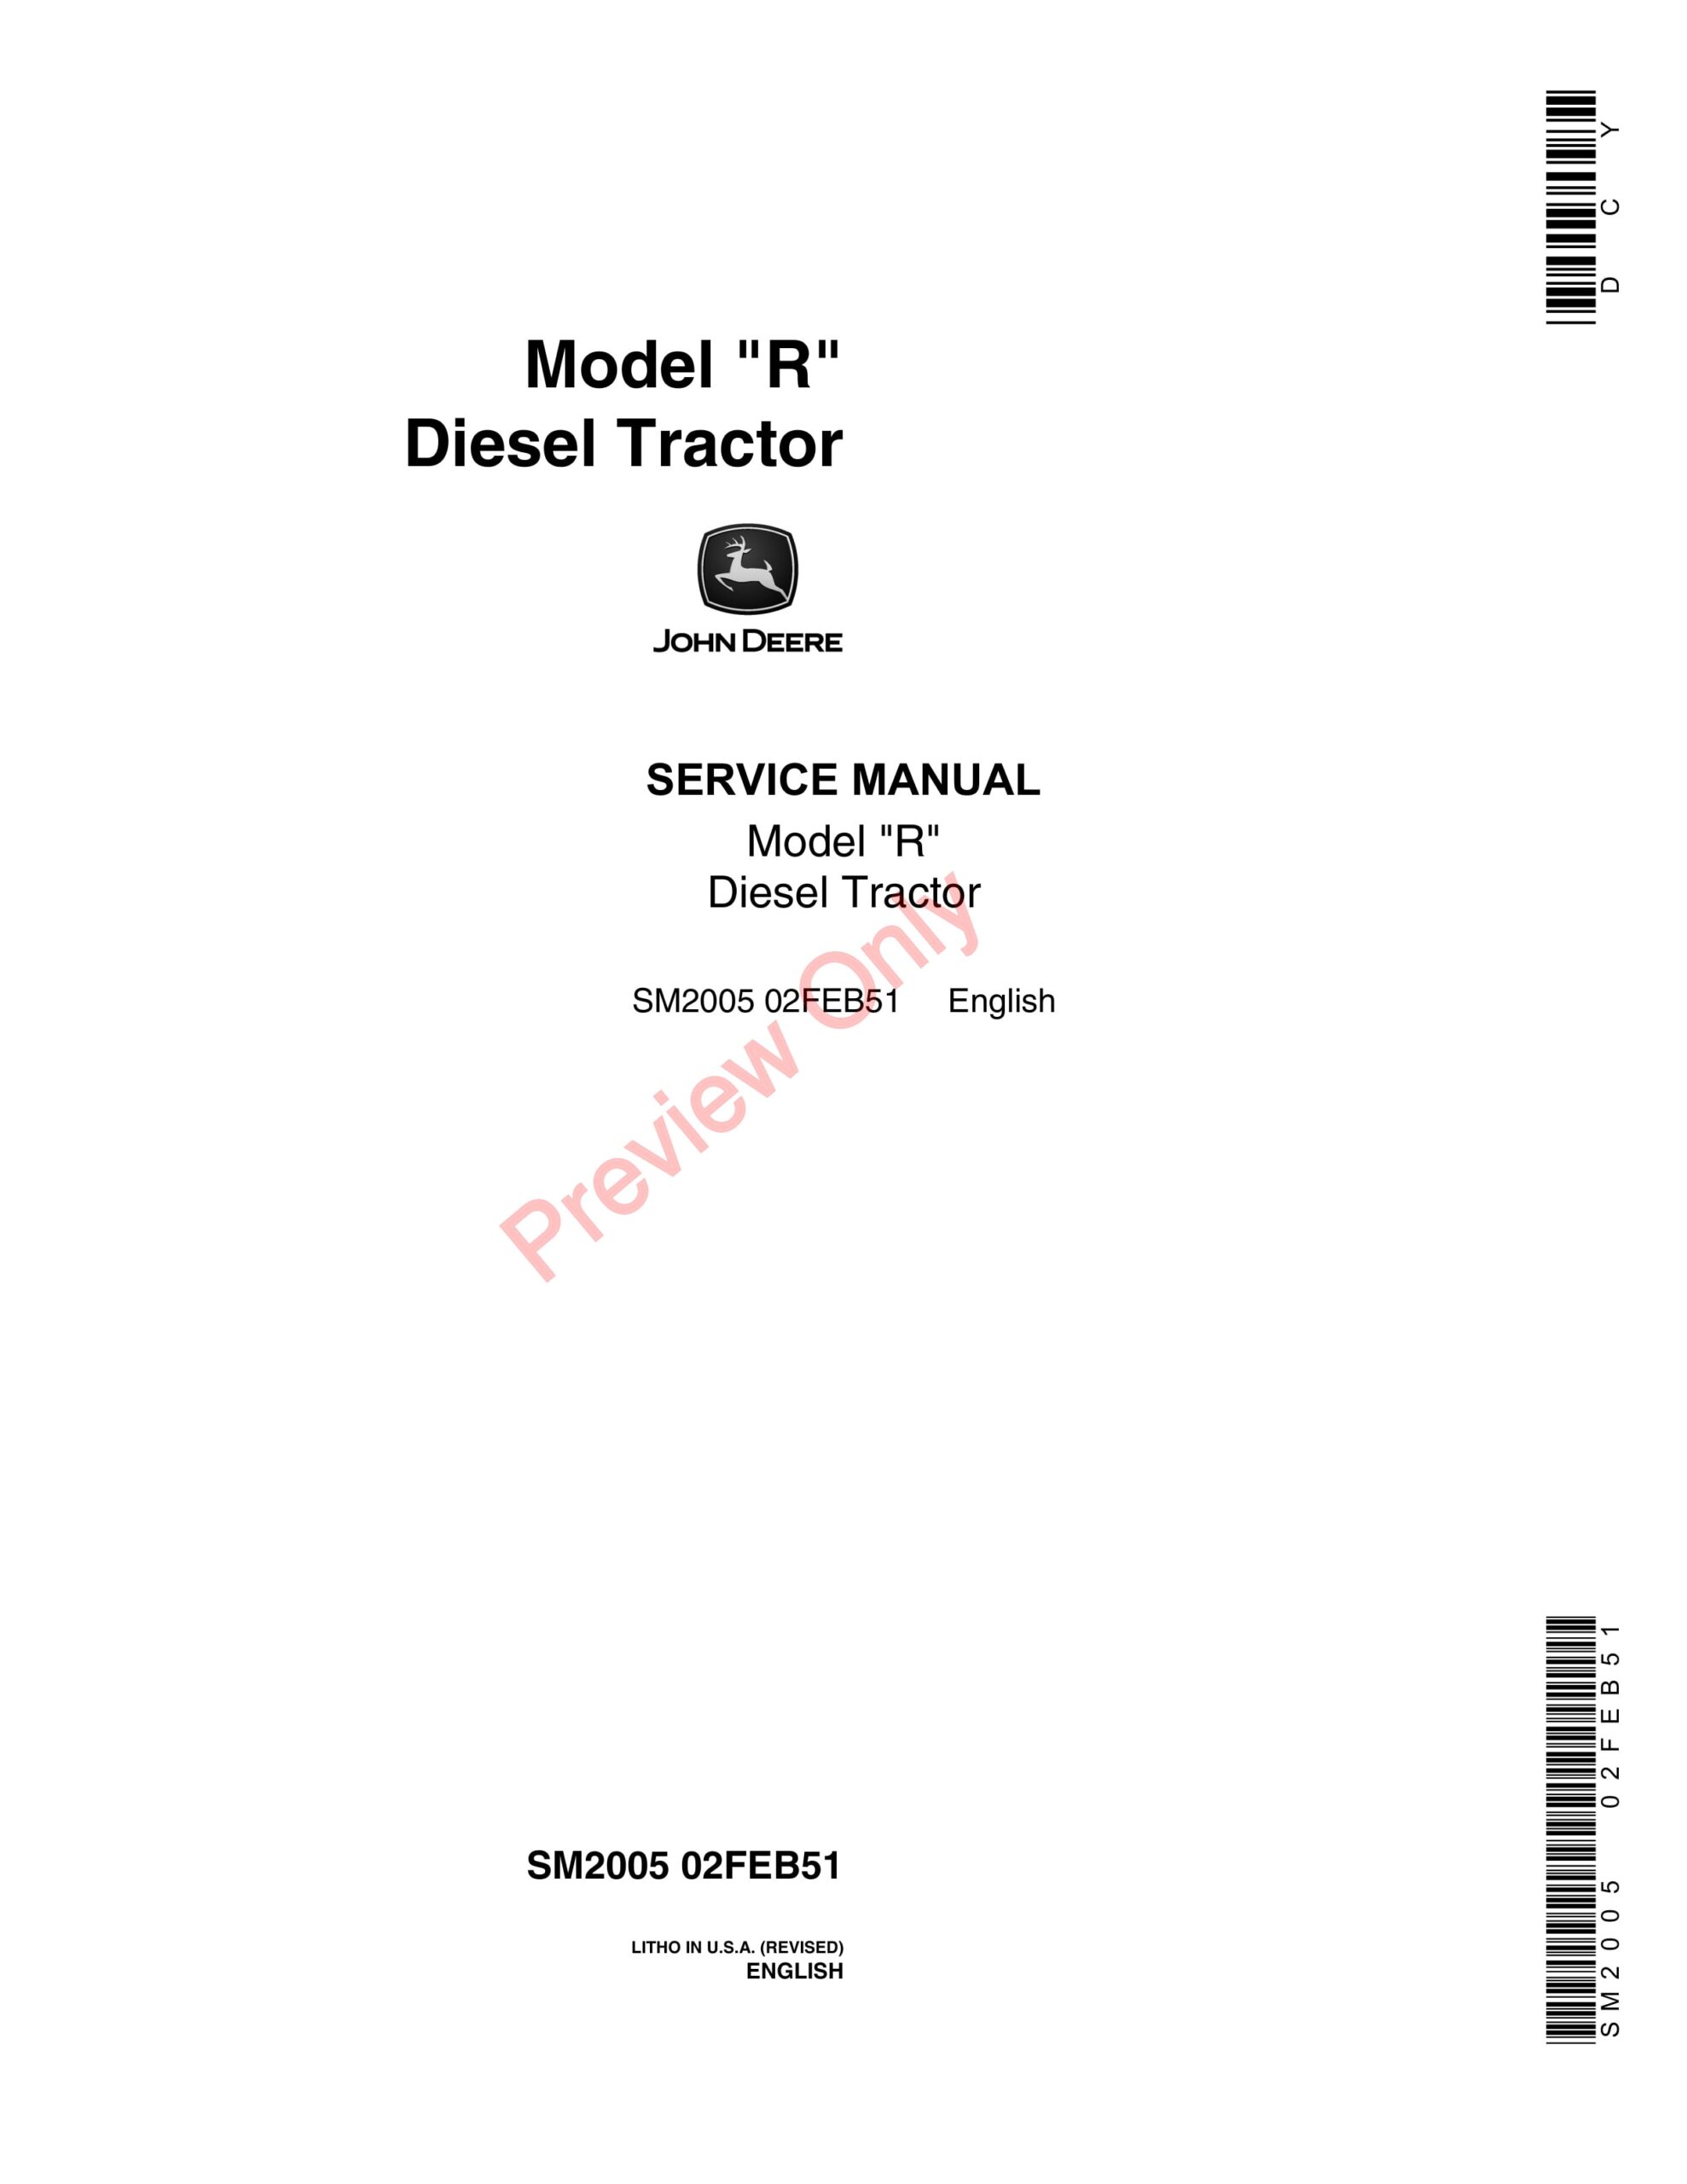 John Deere Model R Diesel Tractor Service Manual SM2005 02FEB51-1